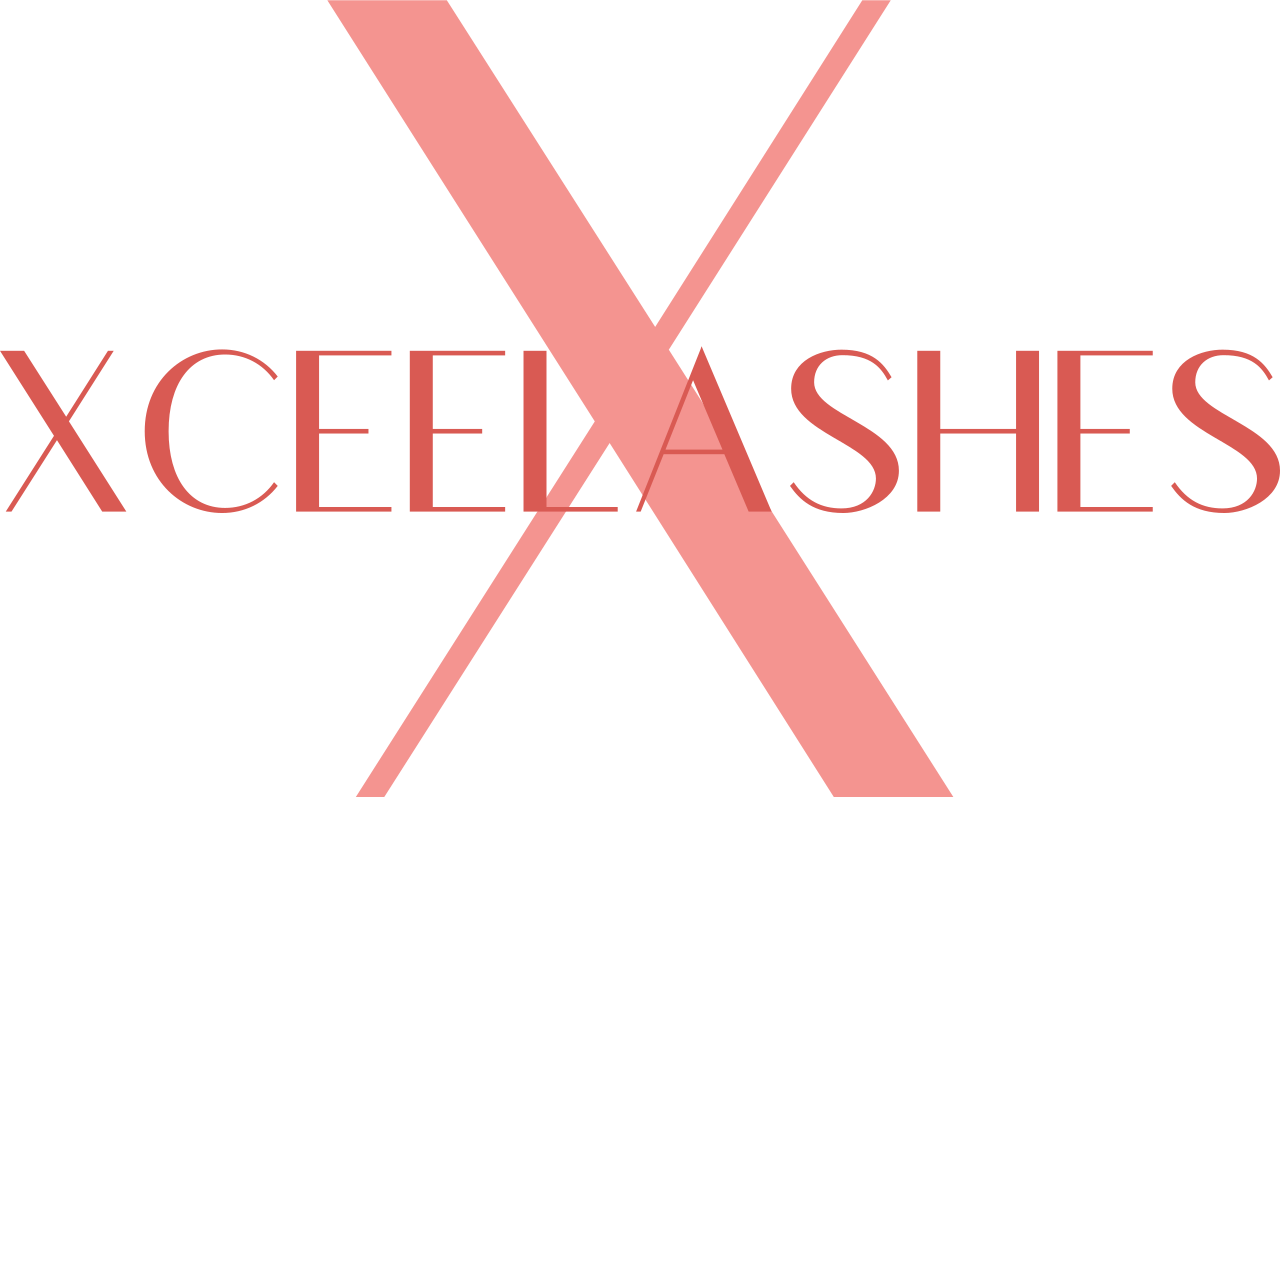 xceelashes's logo